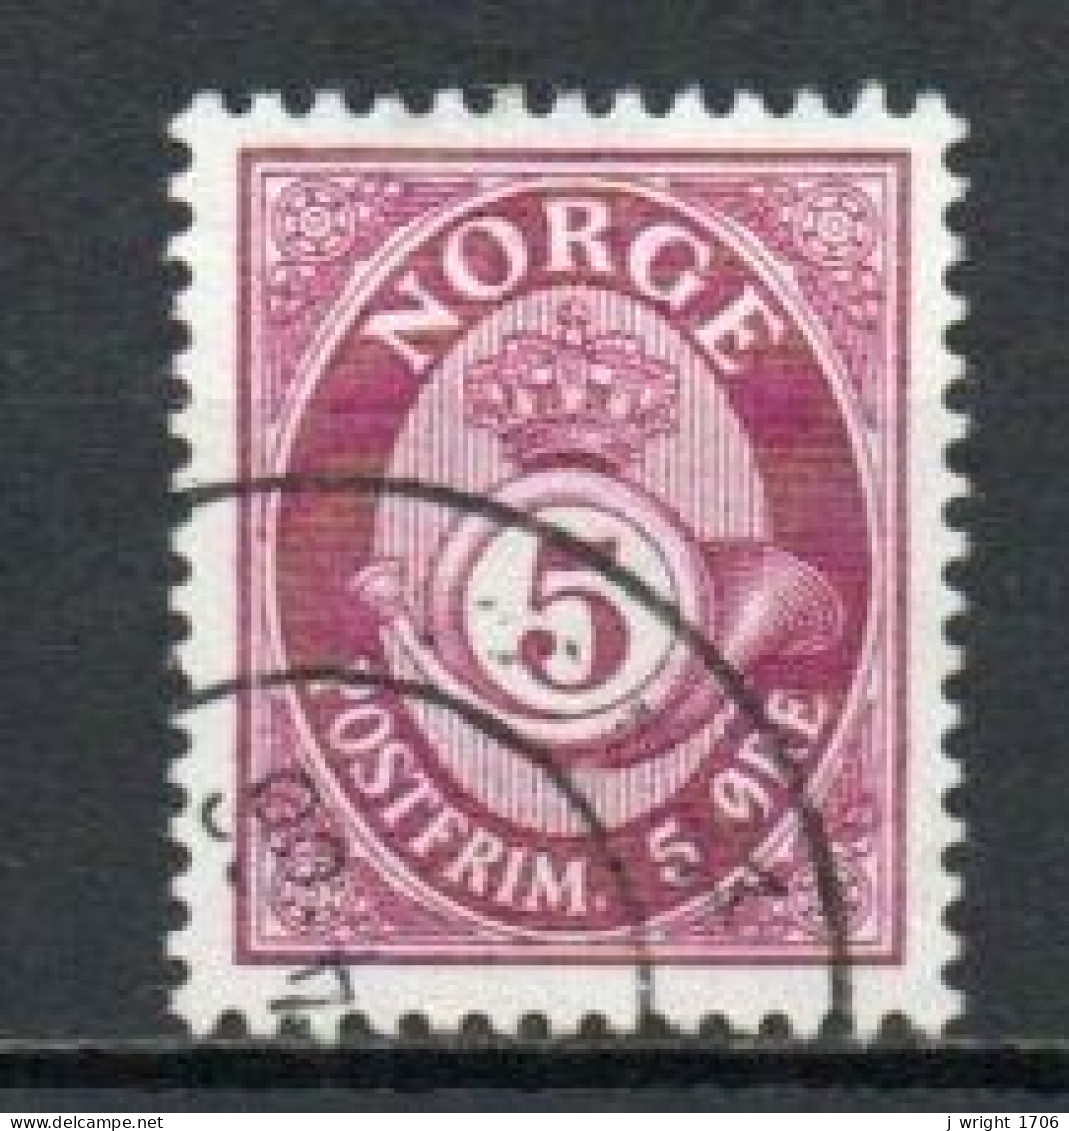 Norway, 1962, Posthorn/Recess, 5ö, USED - Gebruikt